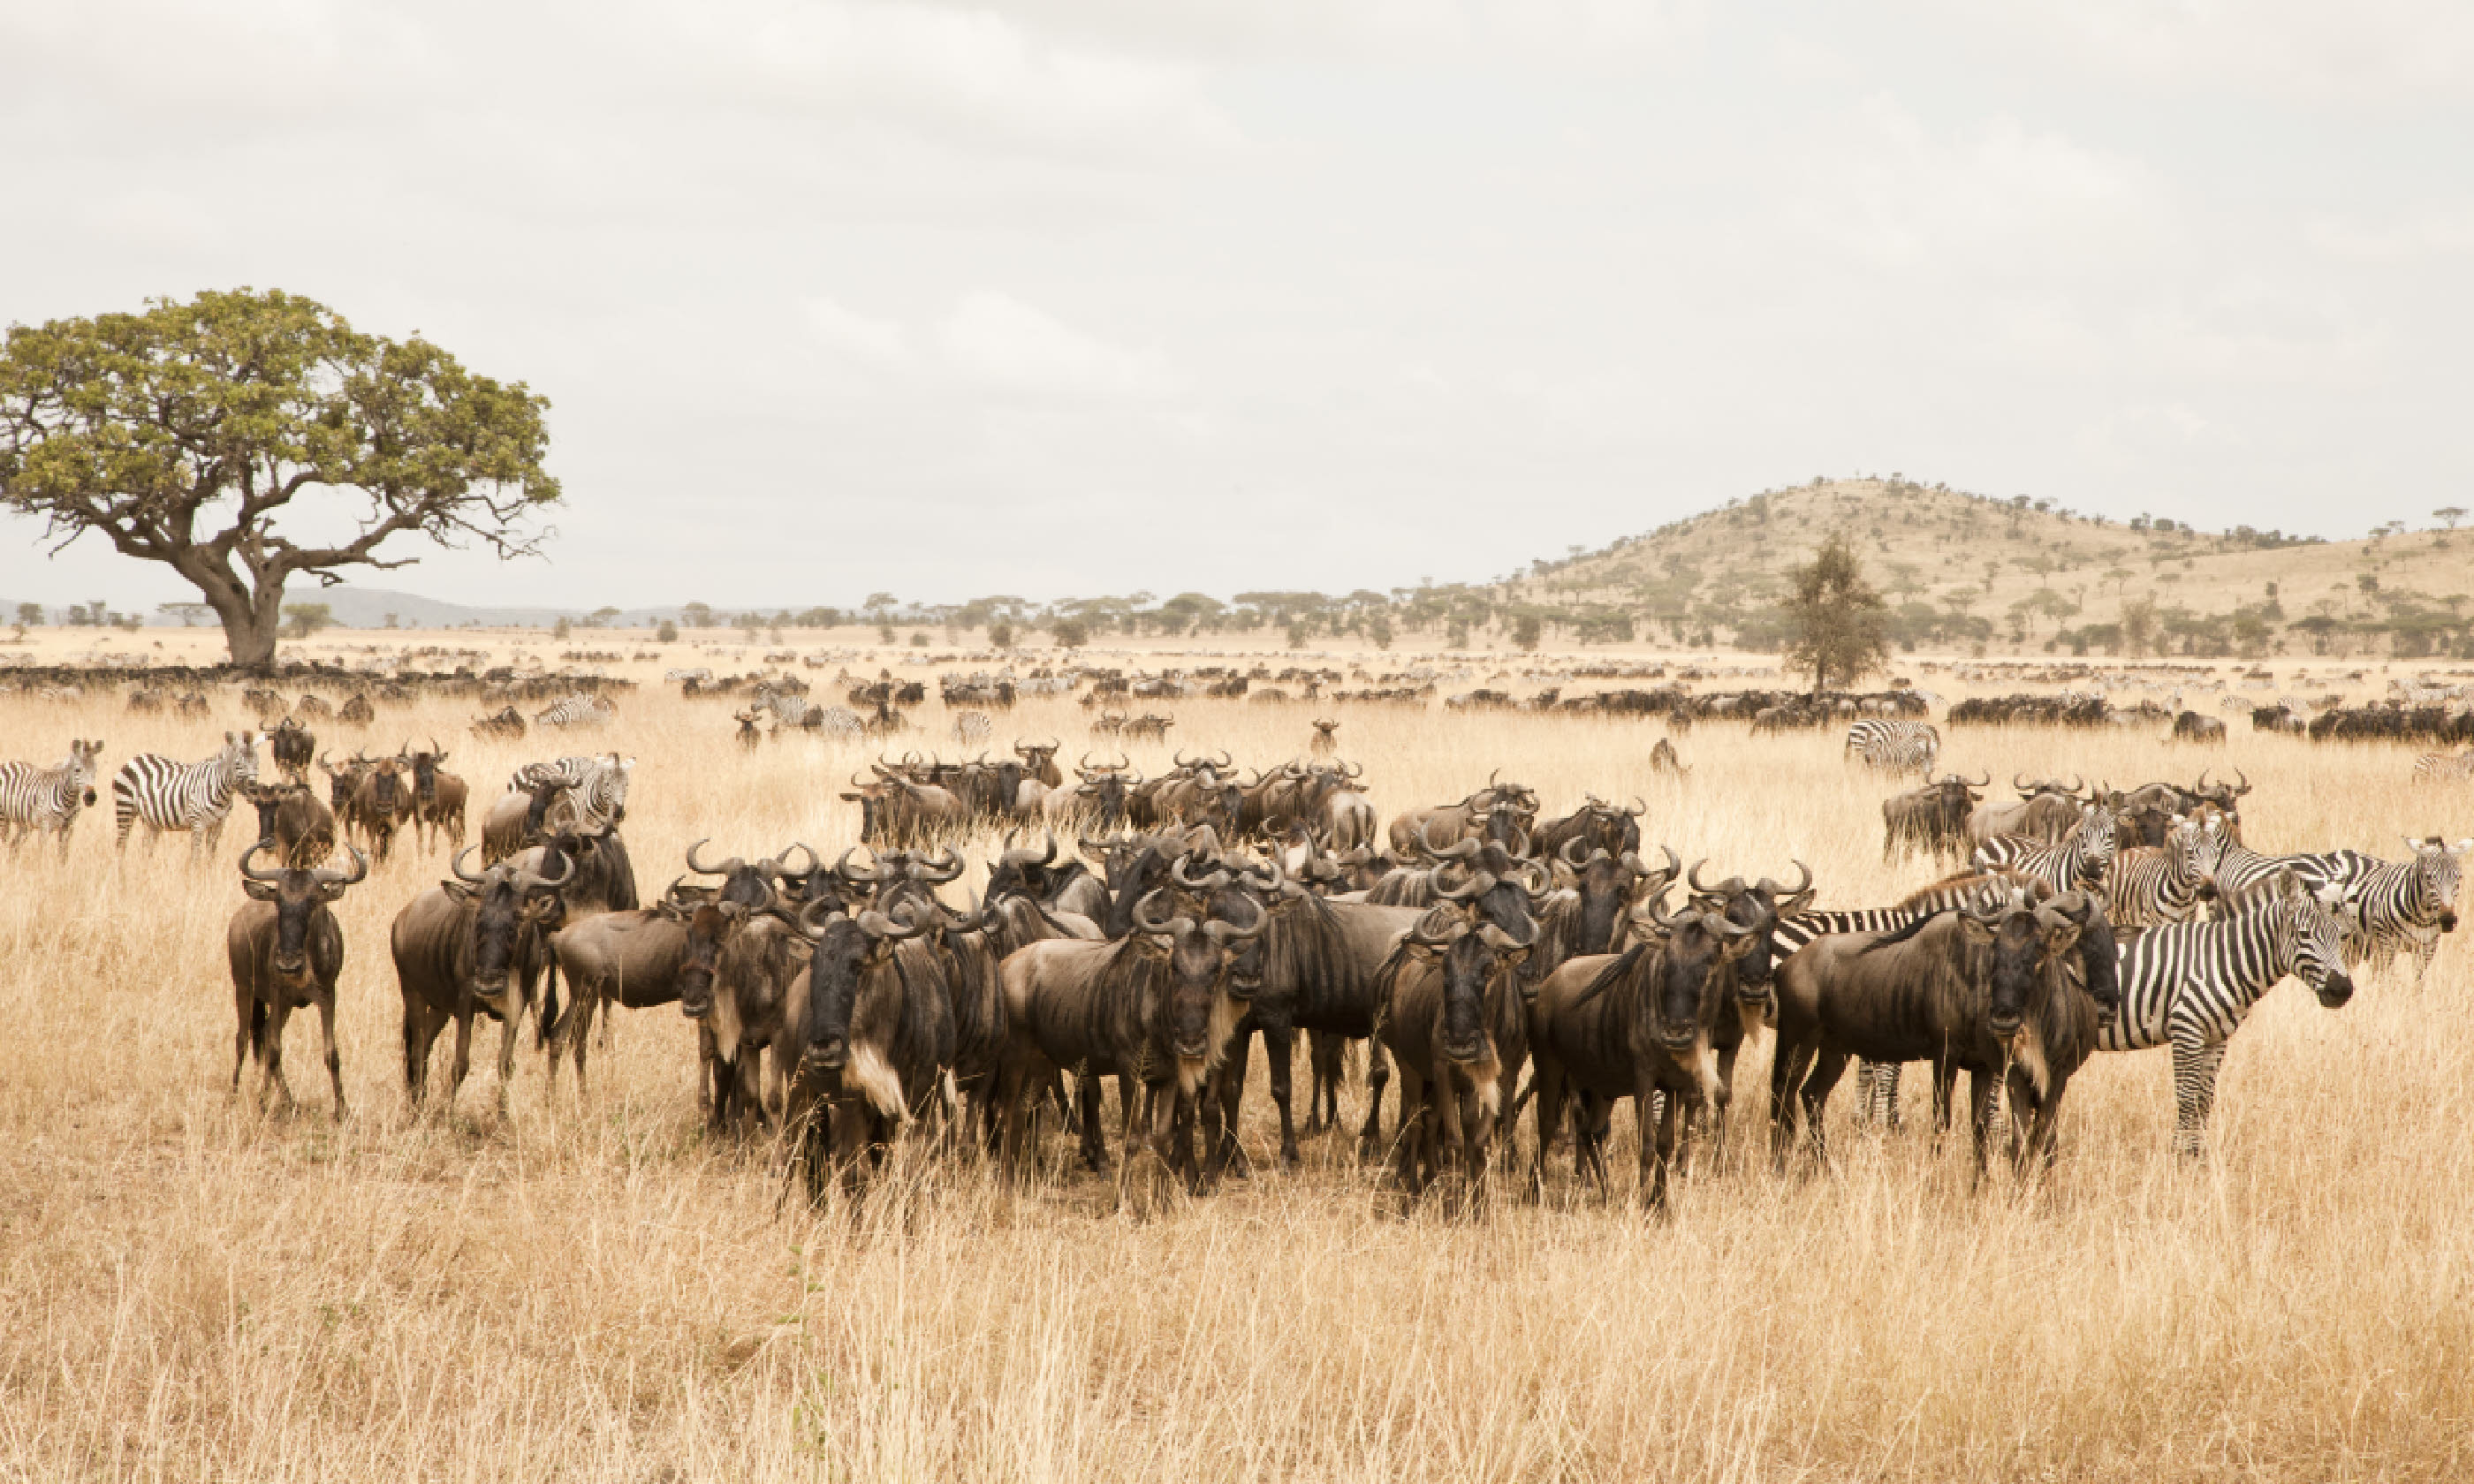 Seronera, Serengeti National Park, Tanzania (Shutterstock)